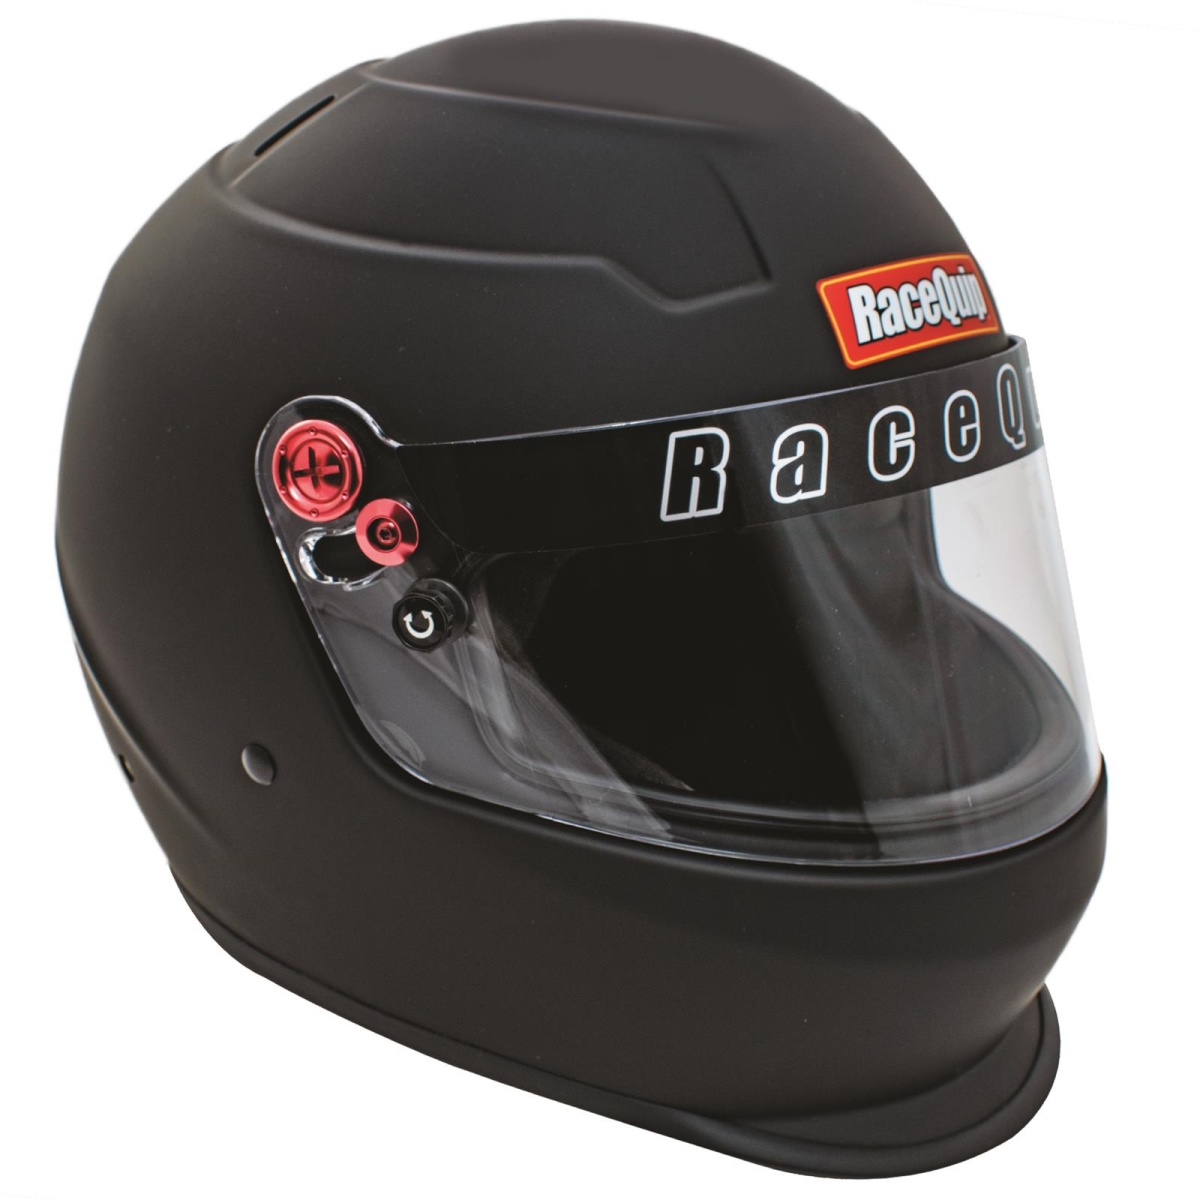 RaceQuip 276993 Full Face Snell SA2020 Helmet, Black - Medium